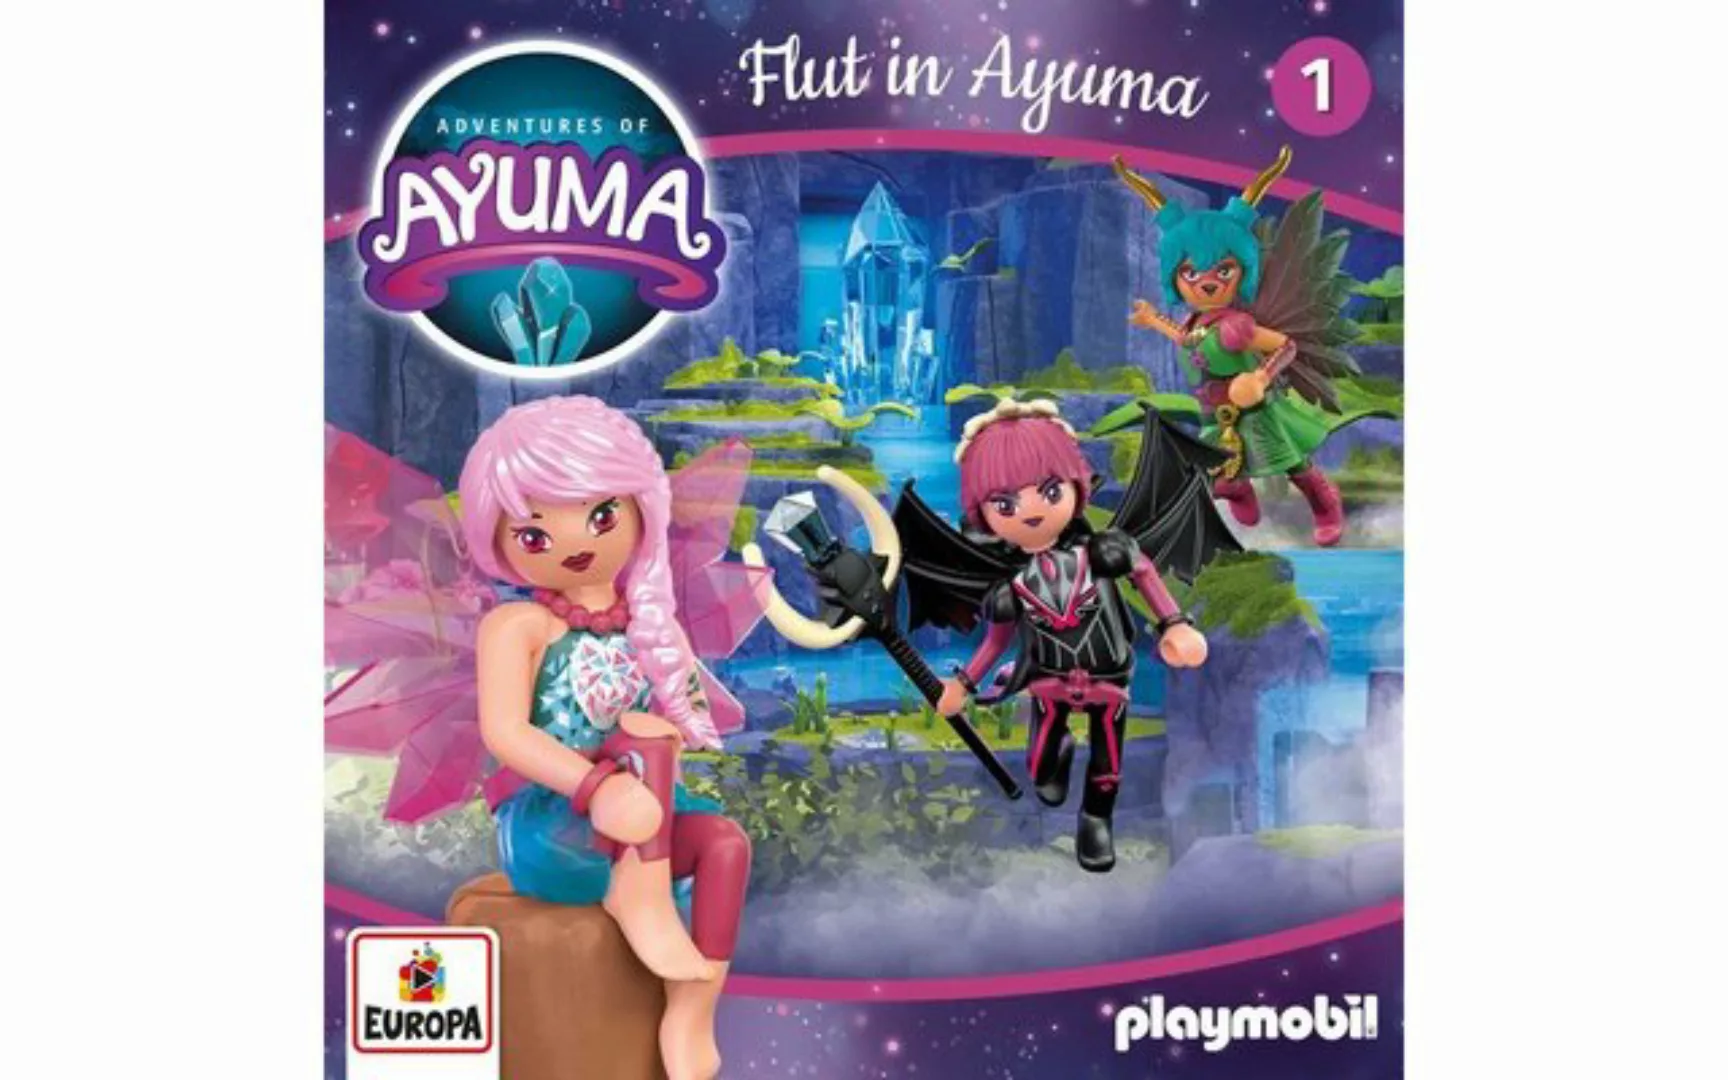 Europa Hörspiel-CD Playmobil Adventures of Ayuma F.1 - Flut in Ayuma günstig online kaufen